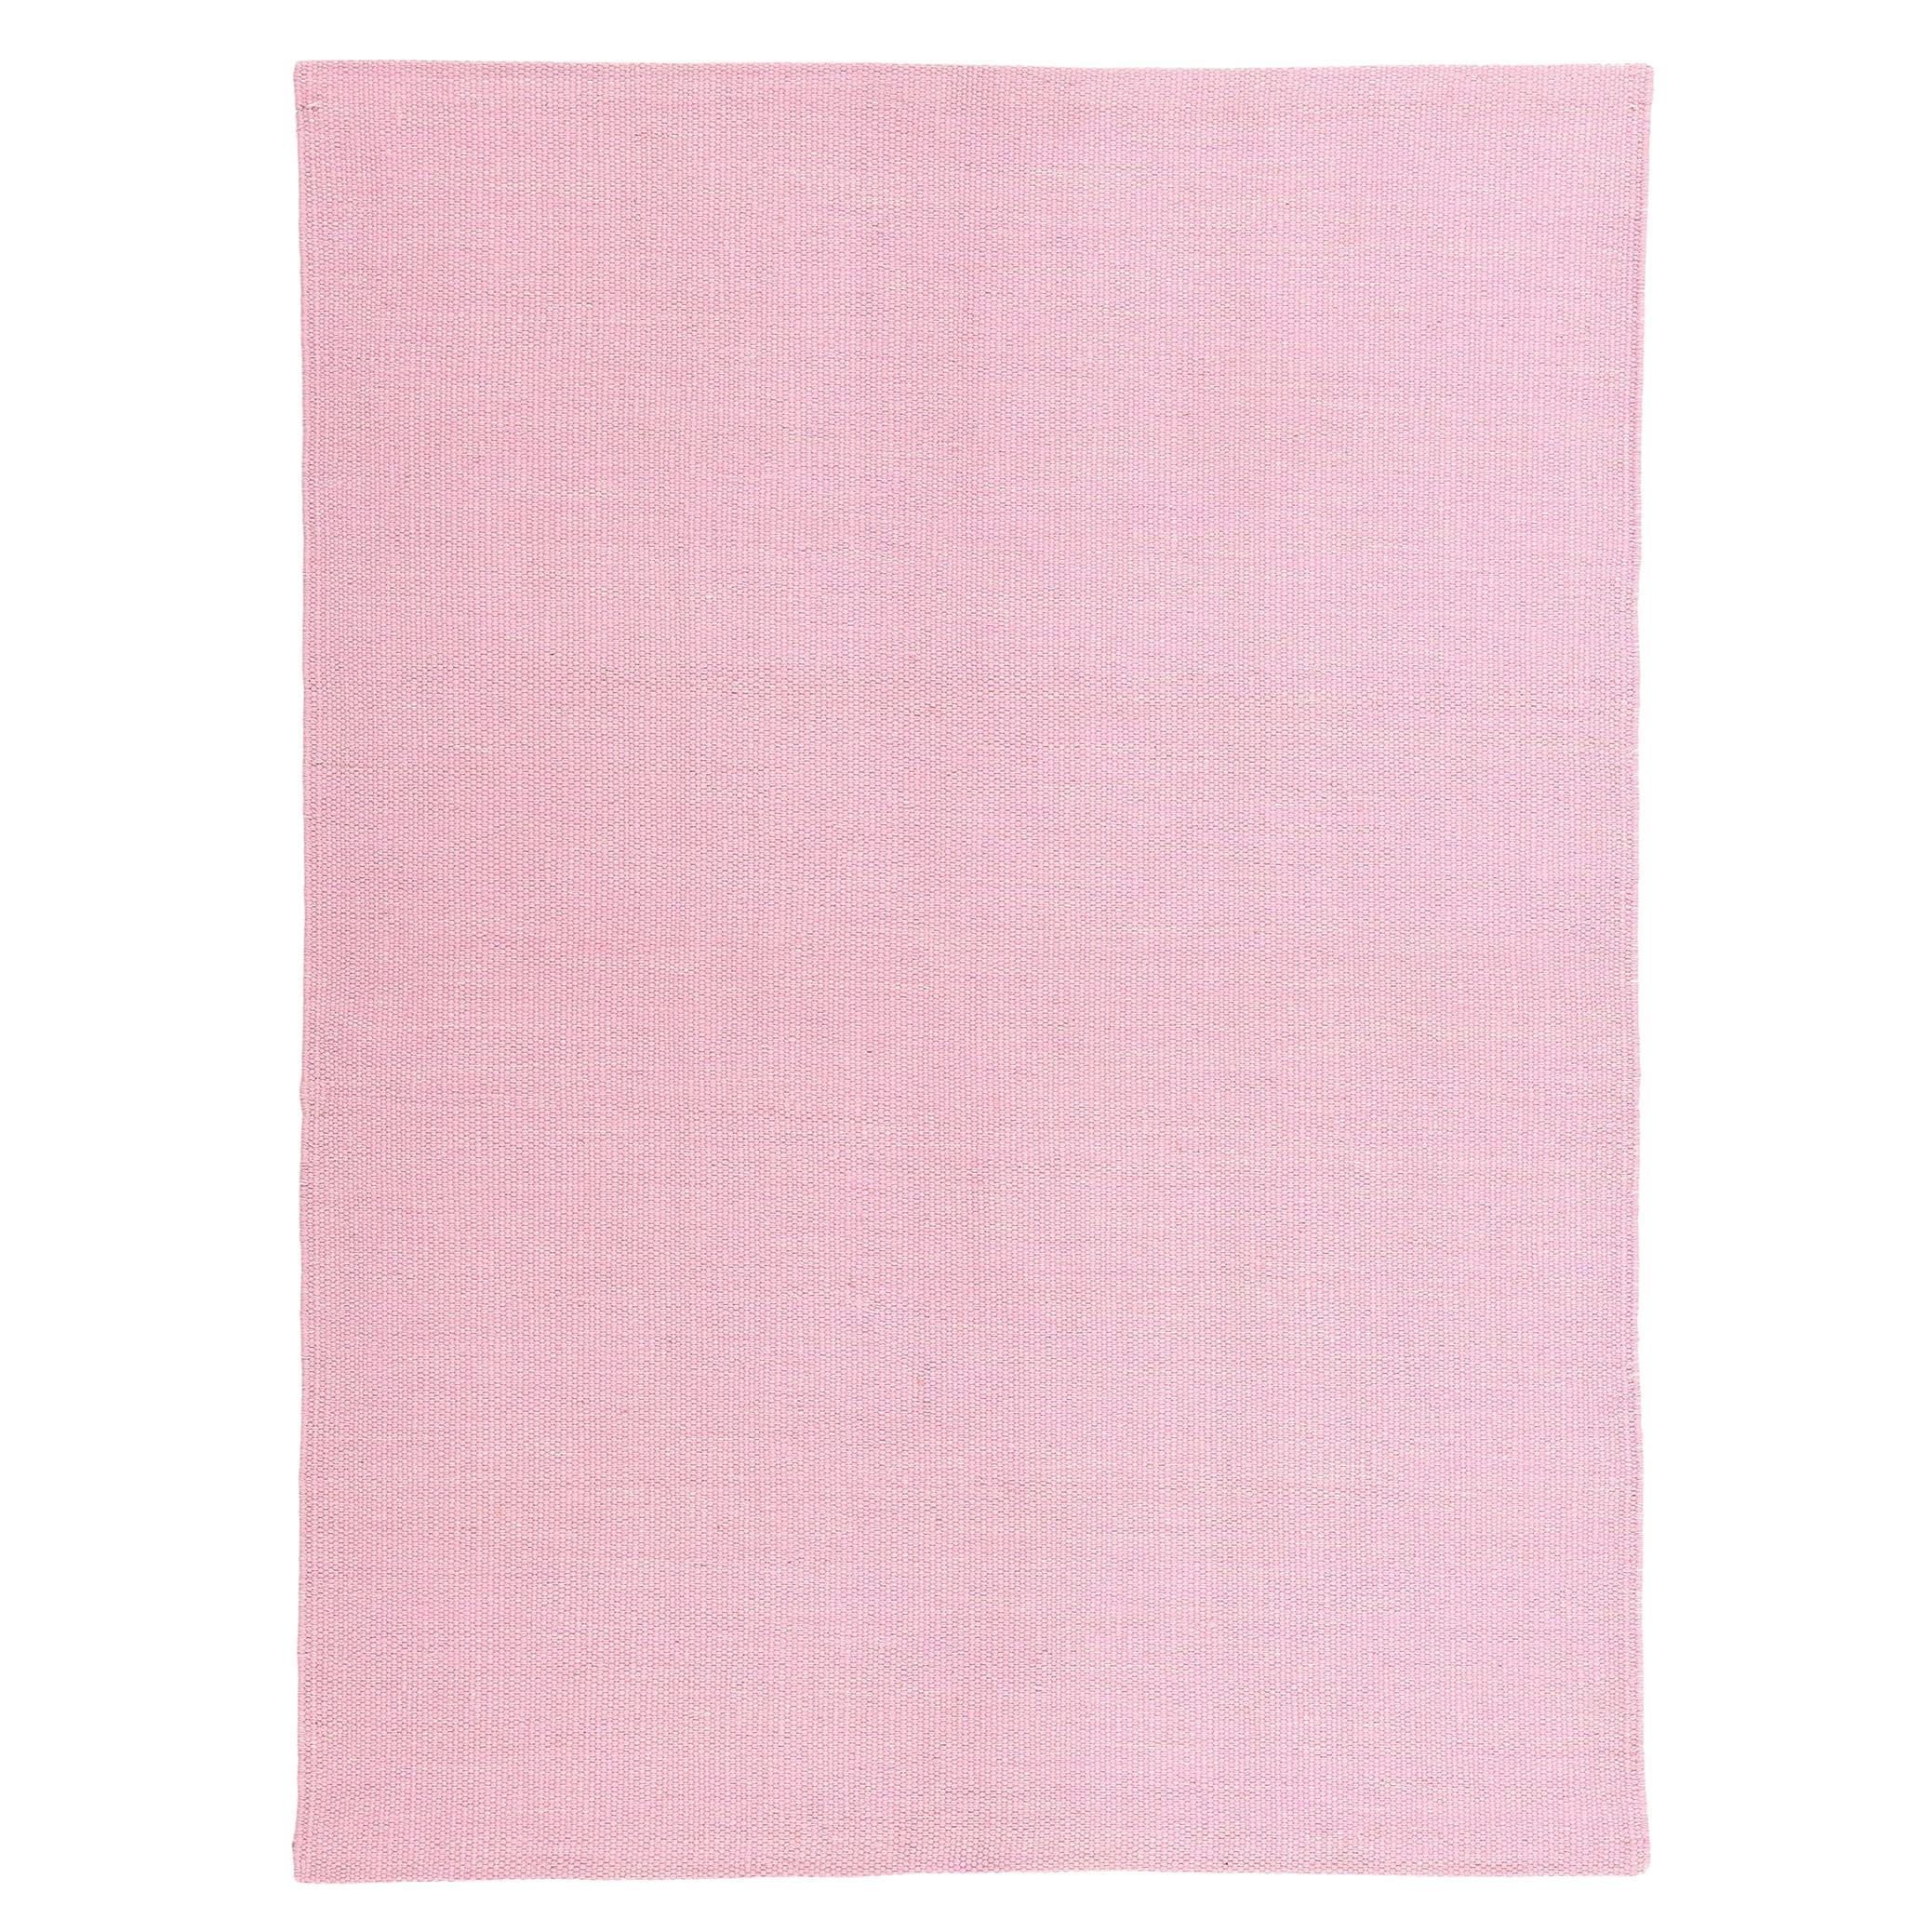 New Swedish Inspired Pink Kilim Rug with Scandinavian Modern Style